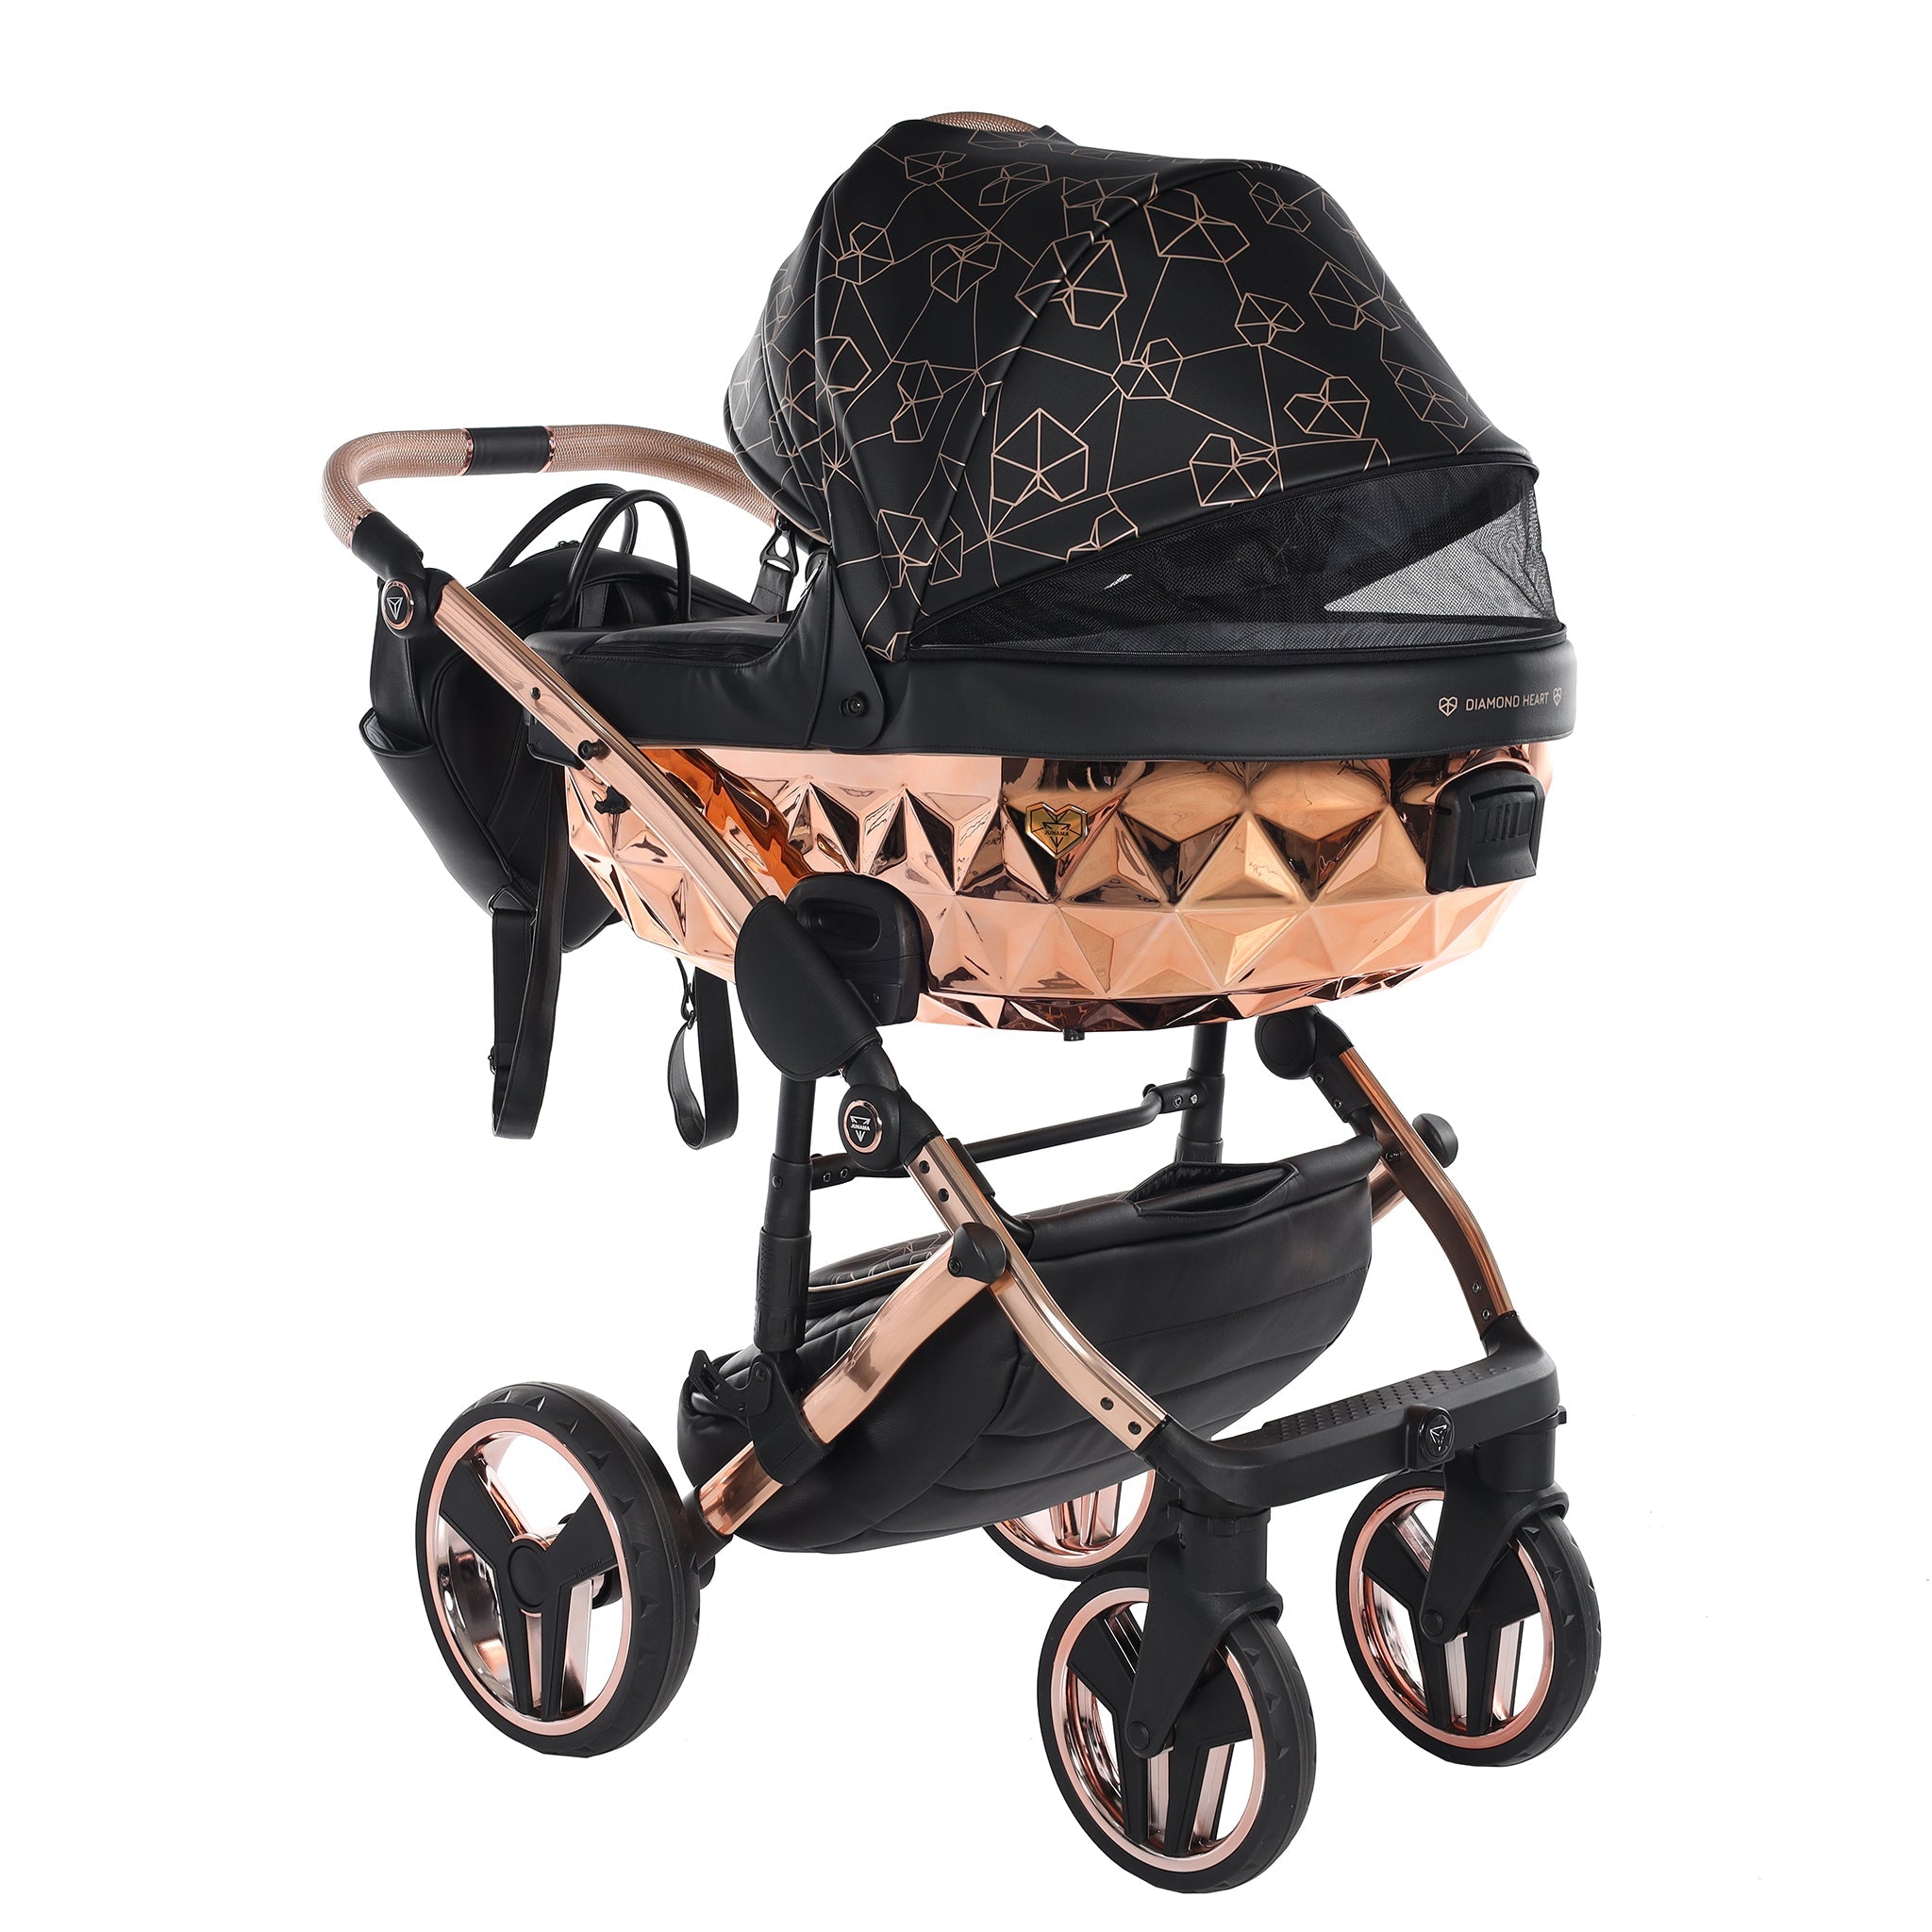 Junama Heart, baby prams or stroller 2 in 1 - Black and Copper, Code number: JUNHERT02